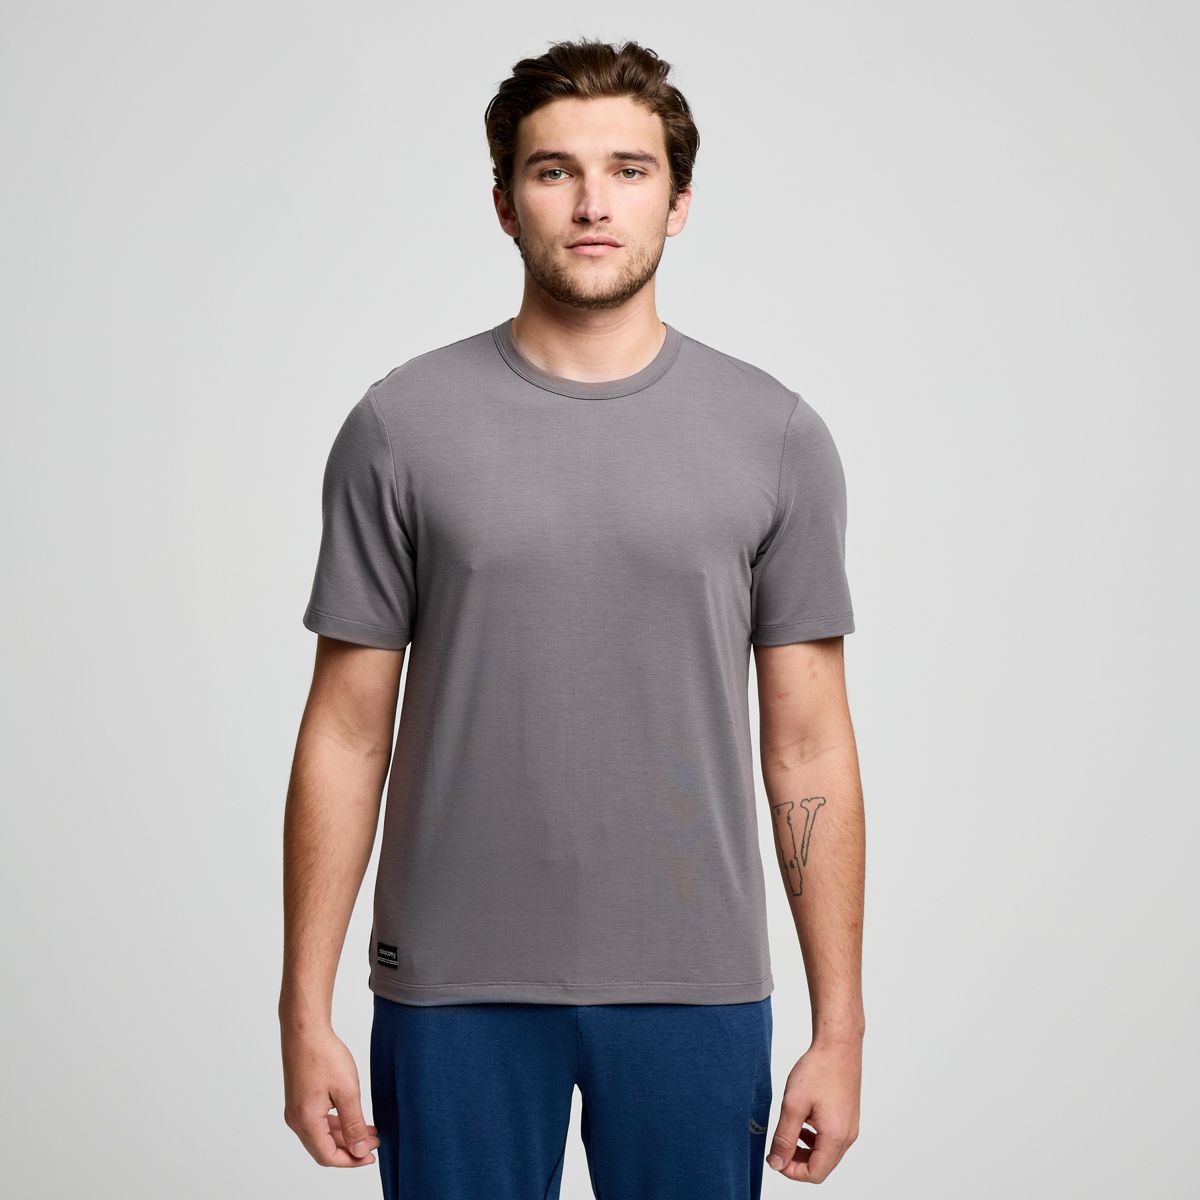 Men's Short & Long-Sleeve Running Shirts